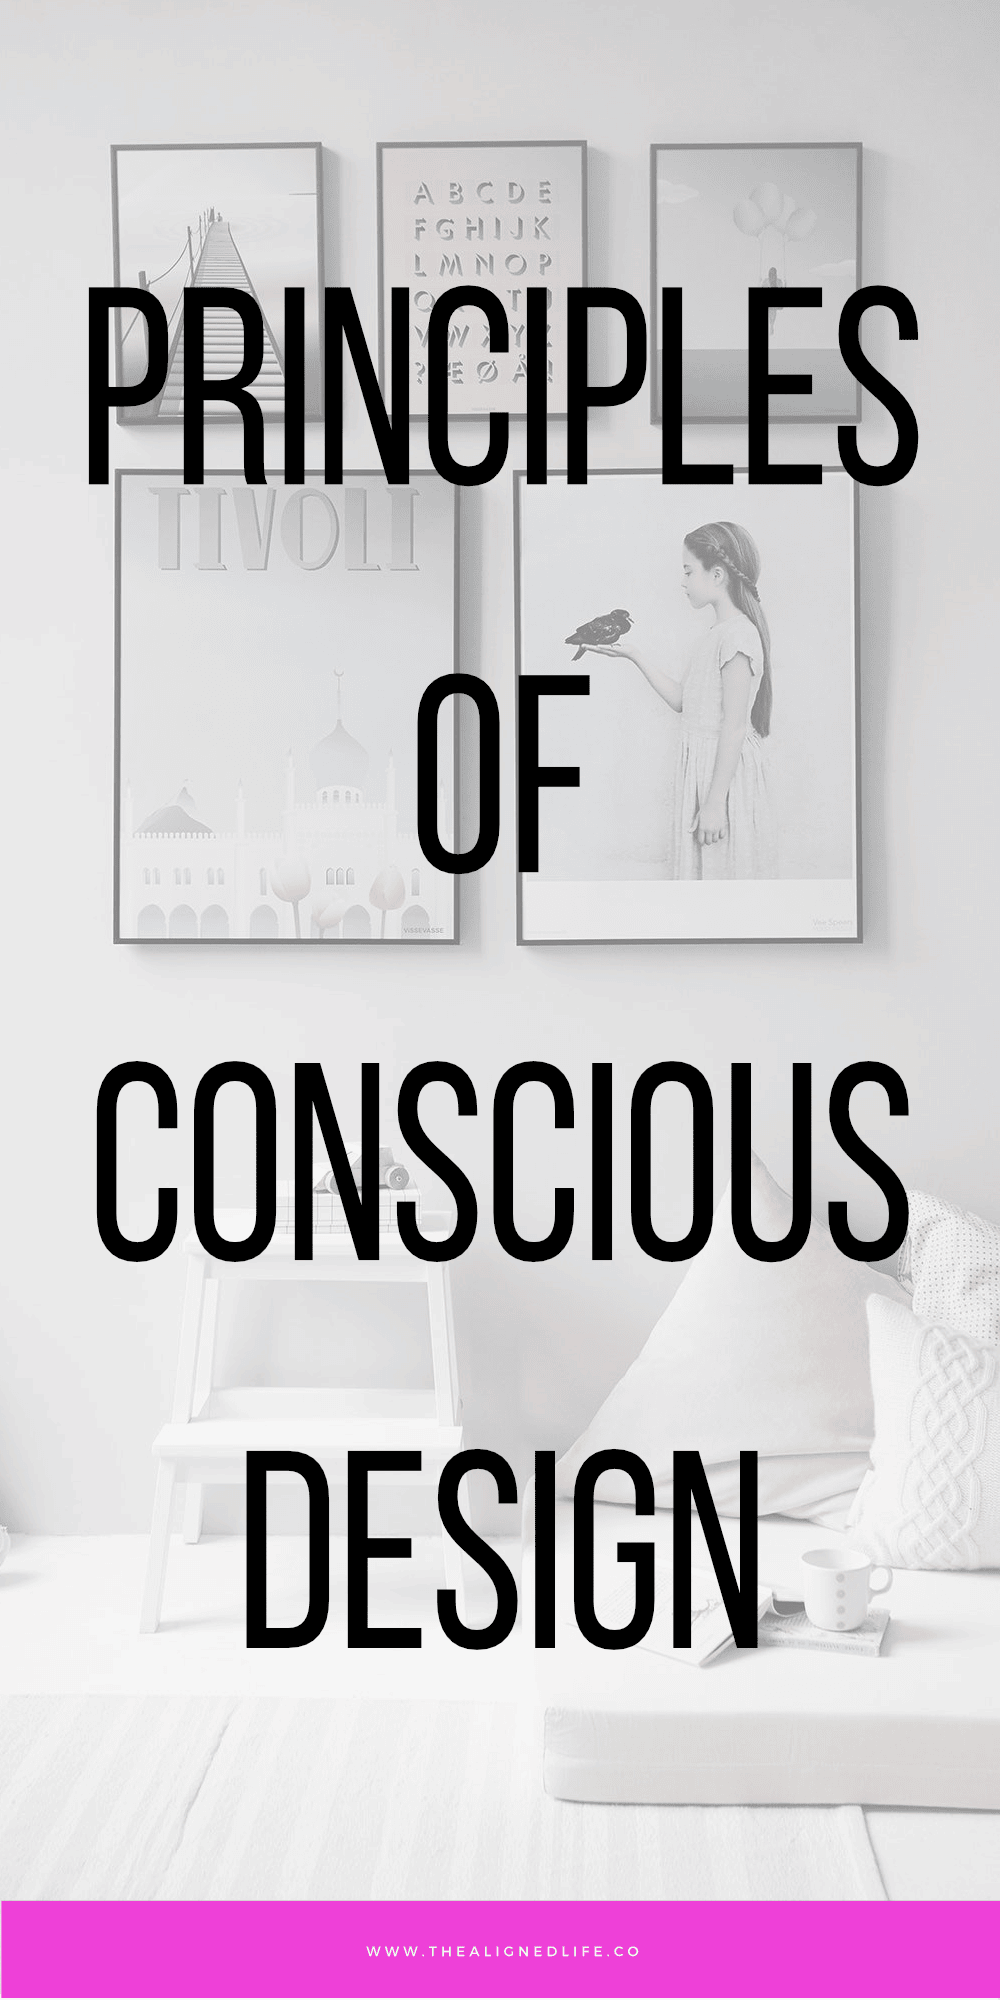 The 7 Principles of Conscious Design